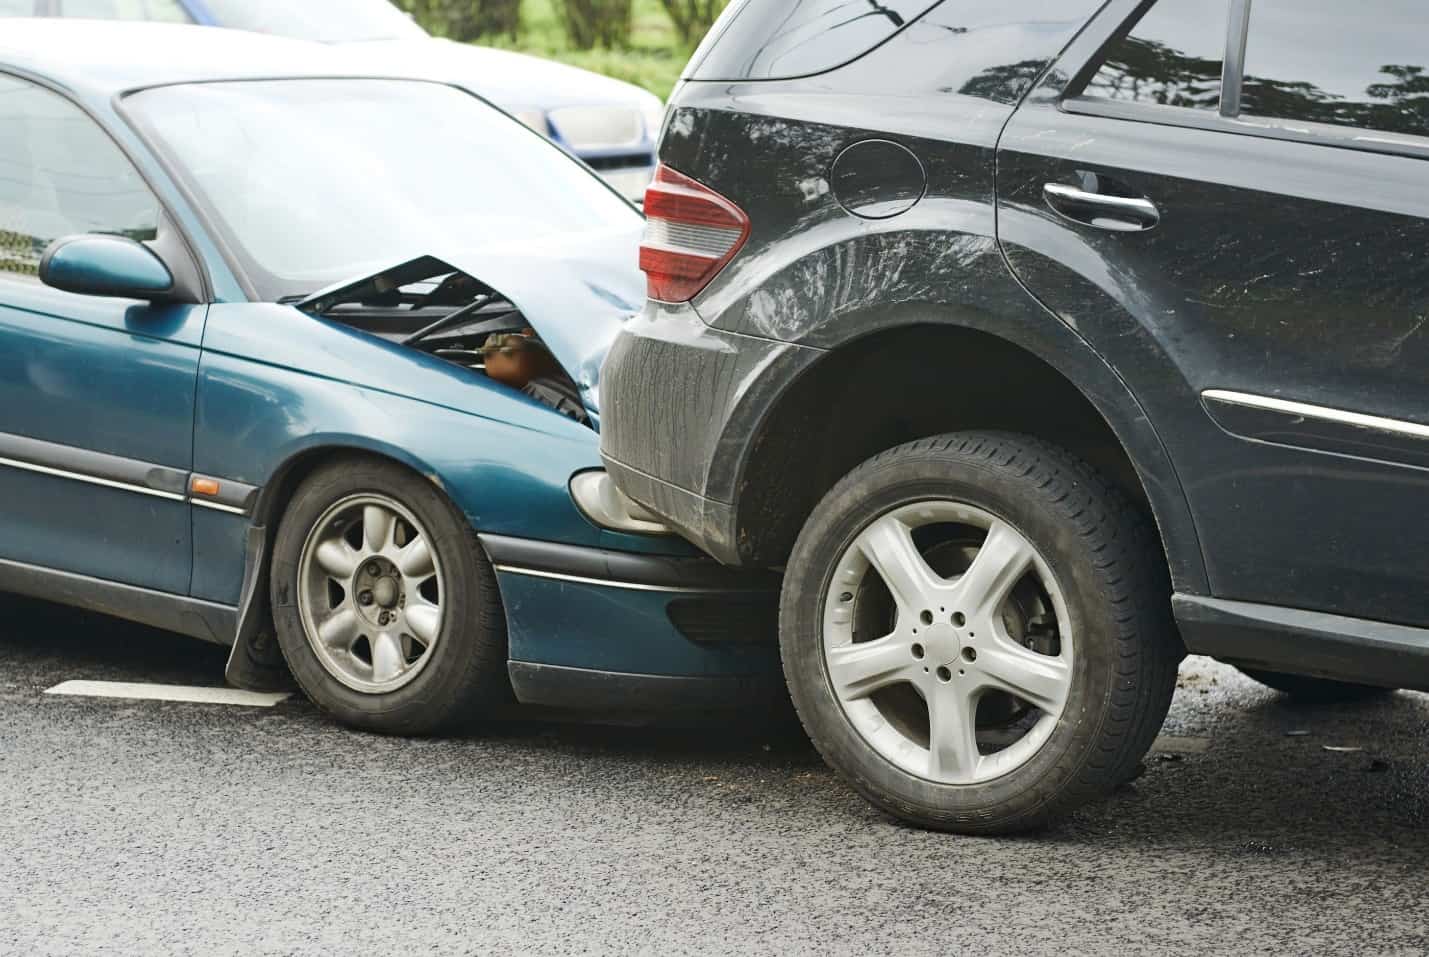 Birmingham Automobile Accident Lawyers